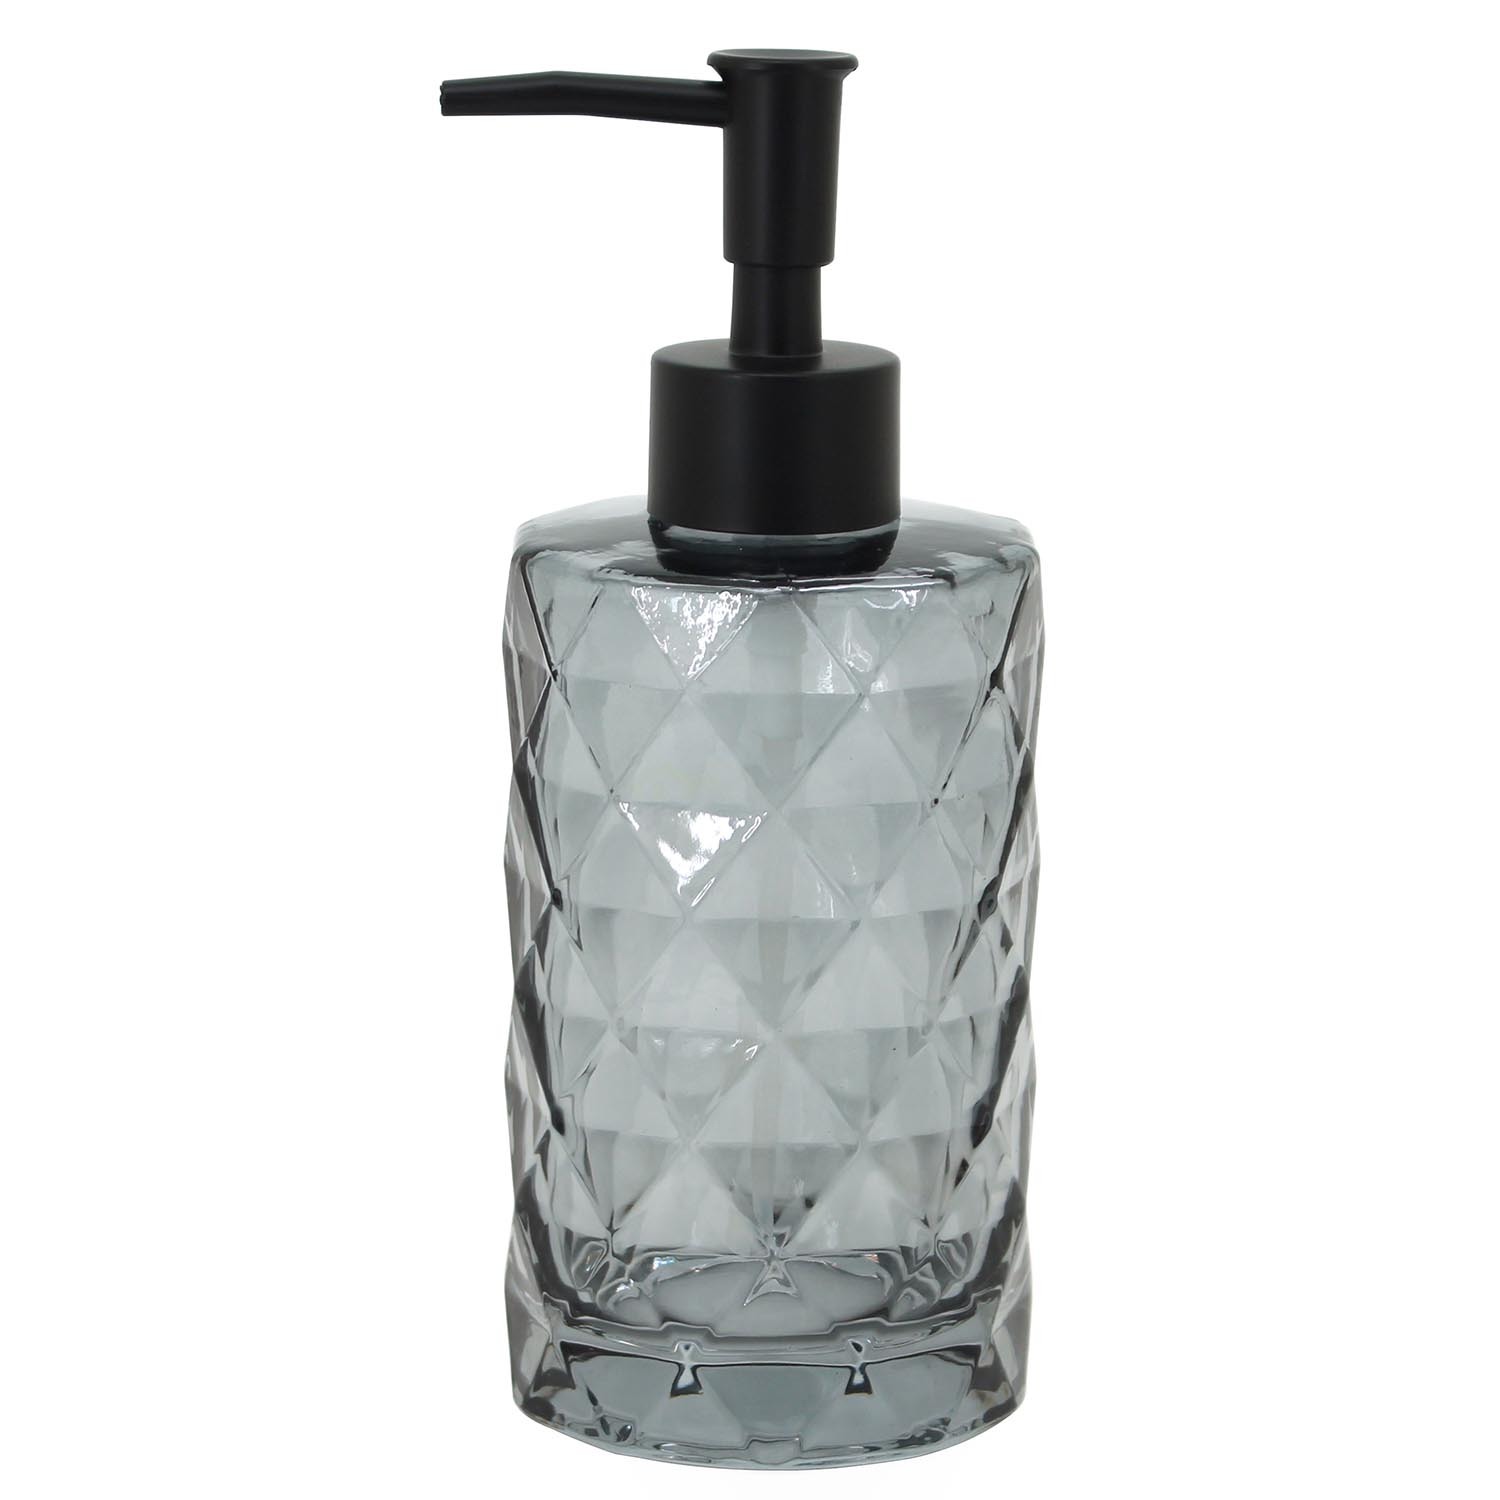 Black Diamond Glass Soap Dispenser Image